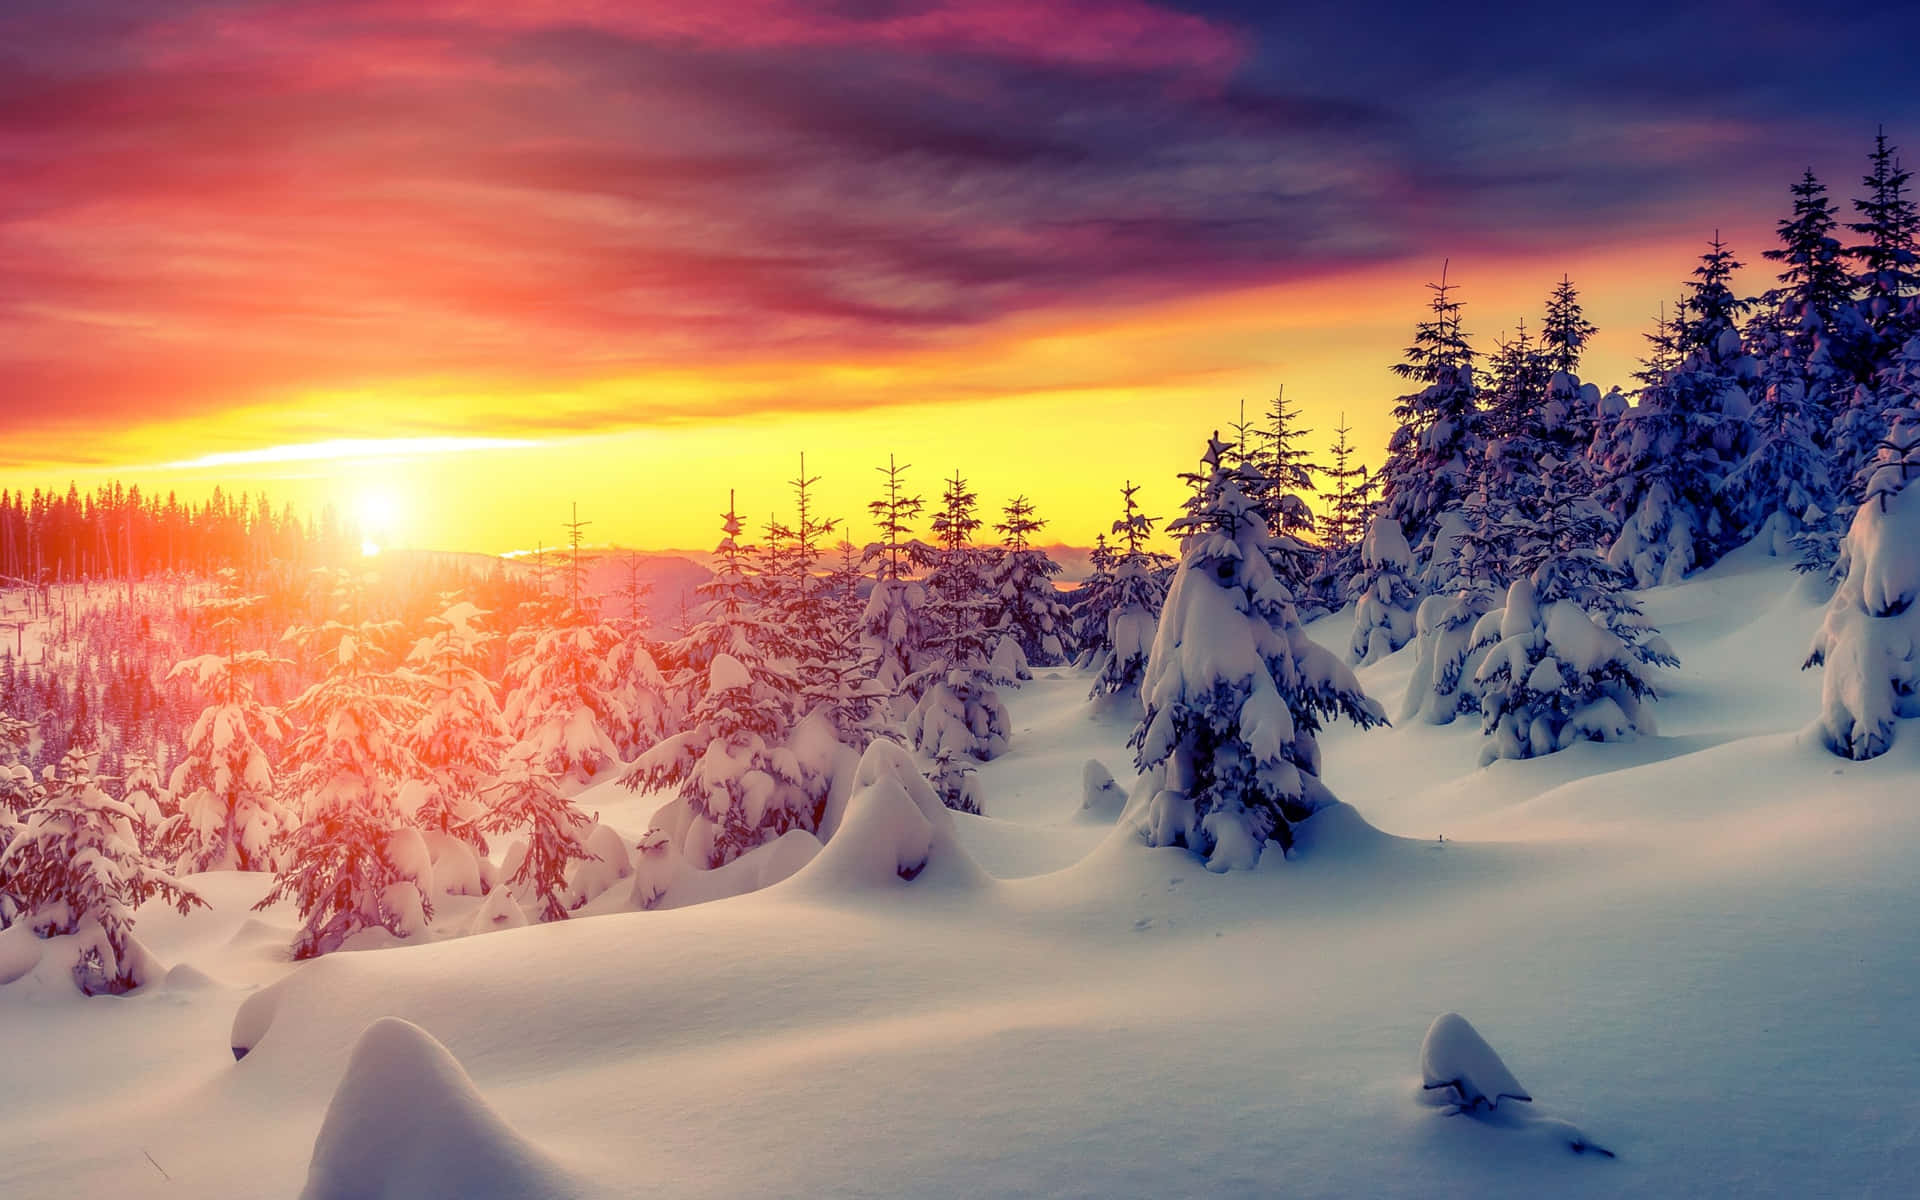 Download Winter Sun 2560 X 1600 Wallpaper Wallpaper | Wallpapers.com